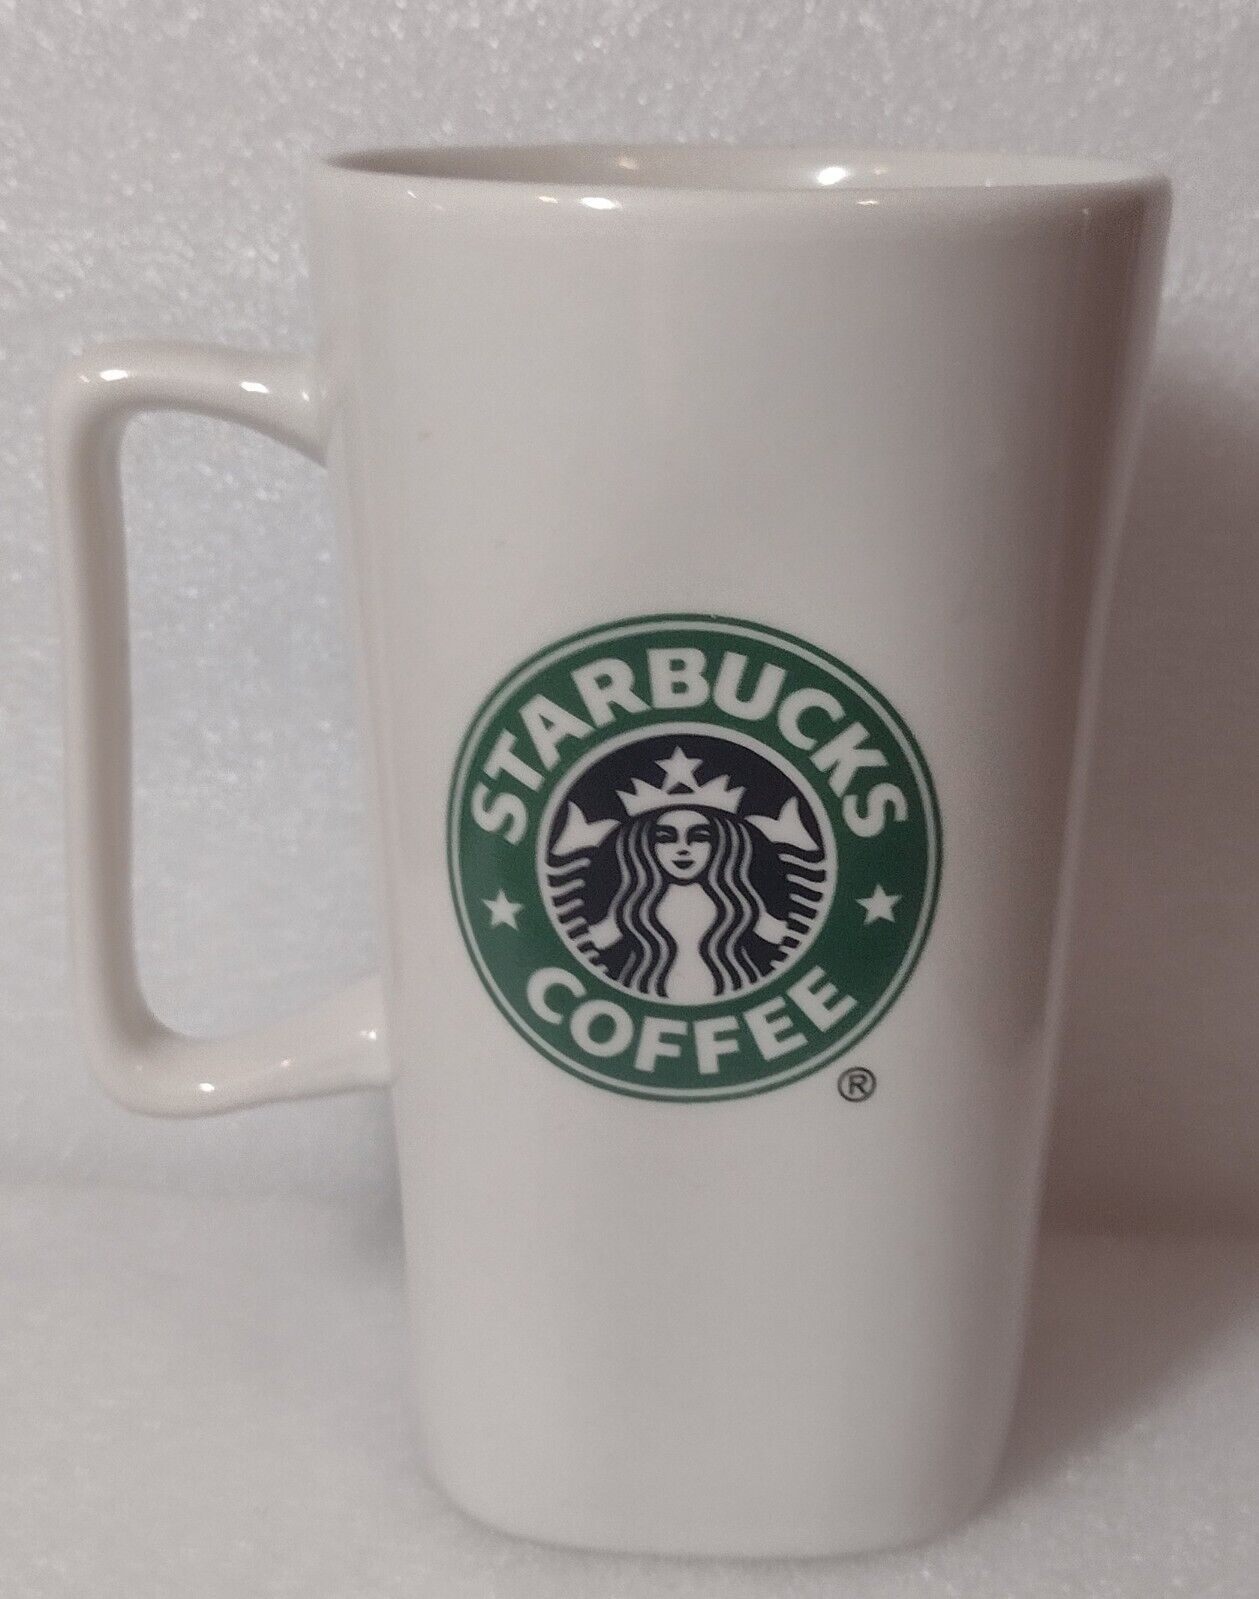 Starbucks Large Coffee Tea Mug Cup Square Bottom 2007 Stringer’s Gift Baskets